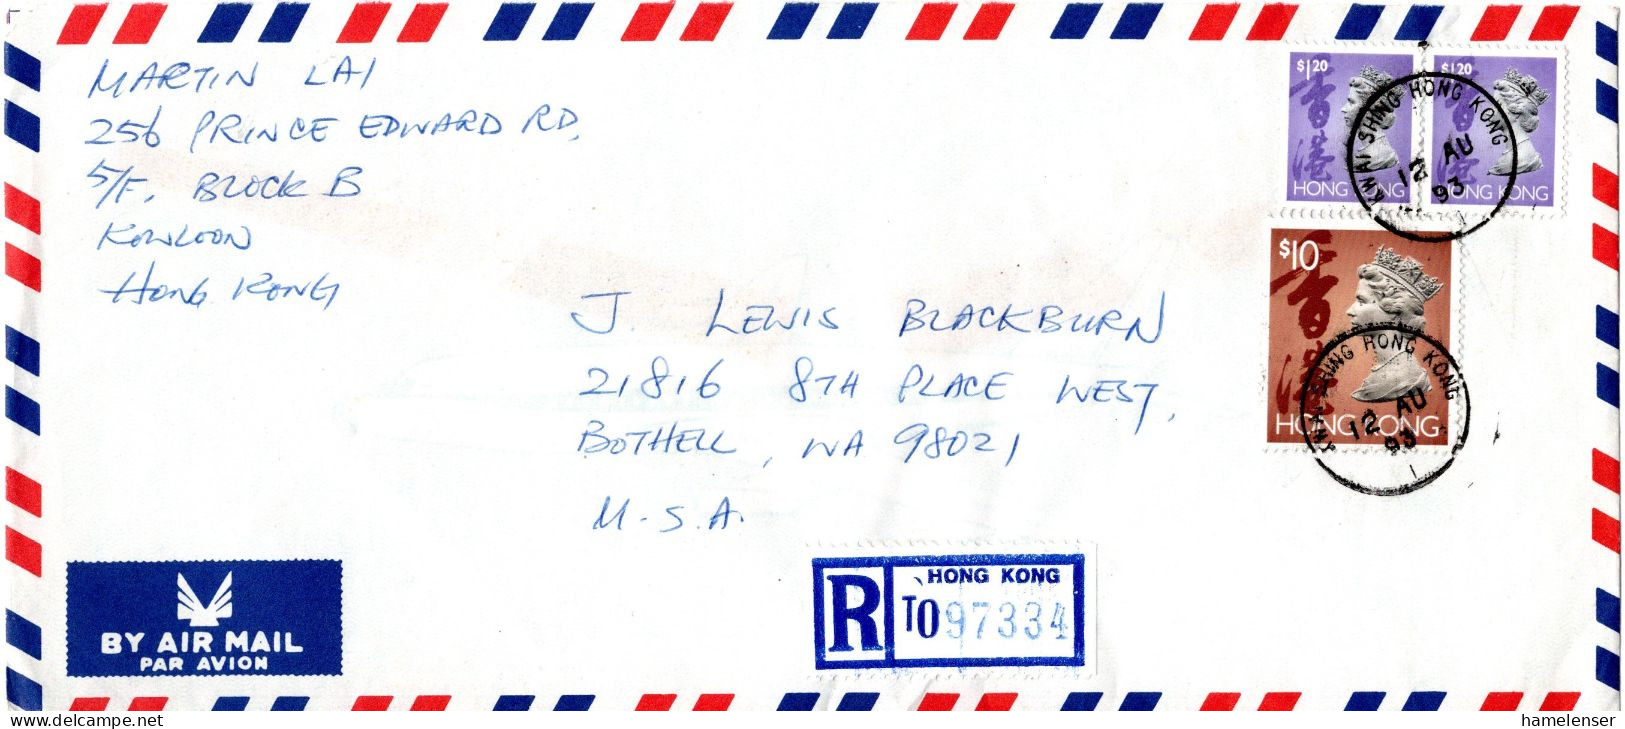 L76707 - Hong Kong - 1993 - $10 QEII MiF A R-LpBf KWAI SHING -> Bothell, WA (USA) - Covers & Documents